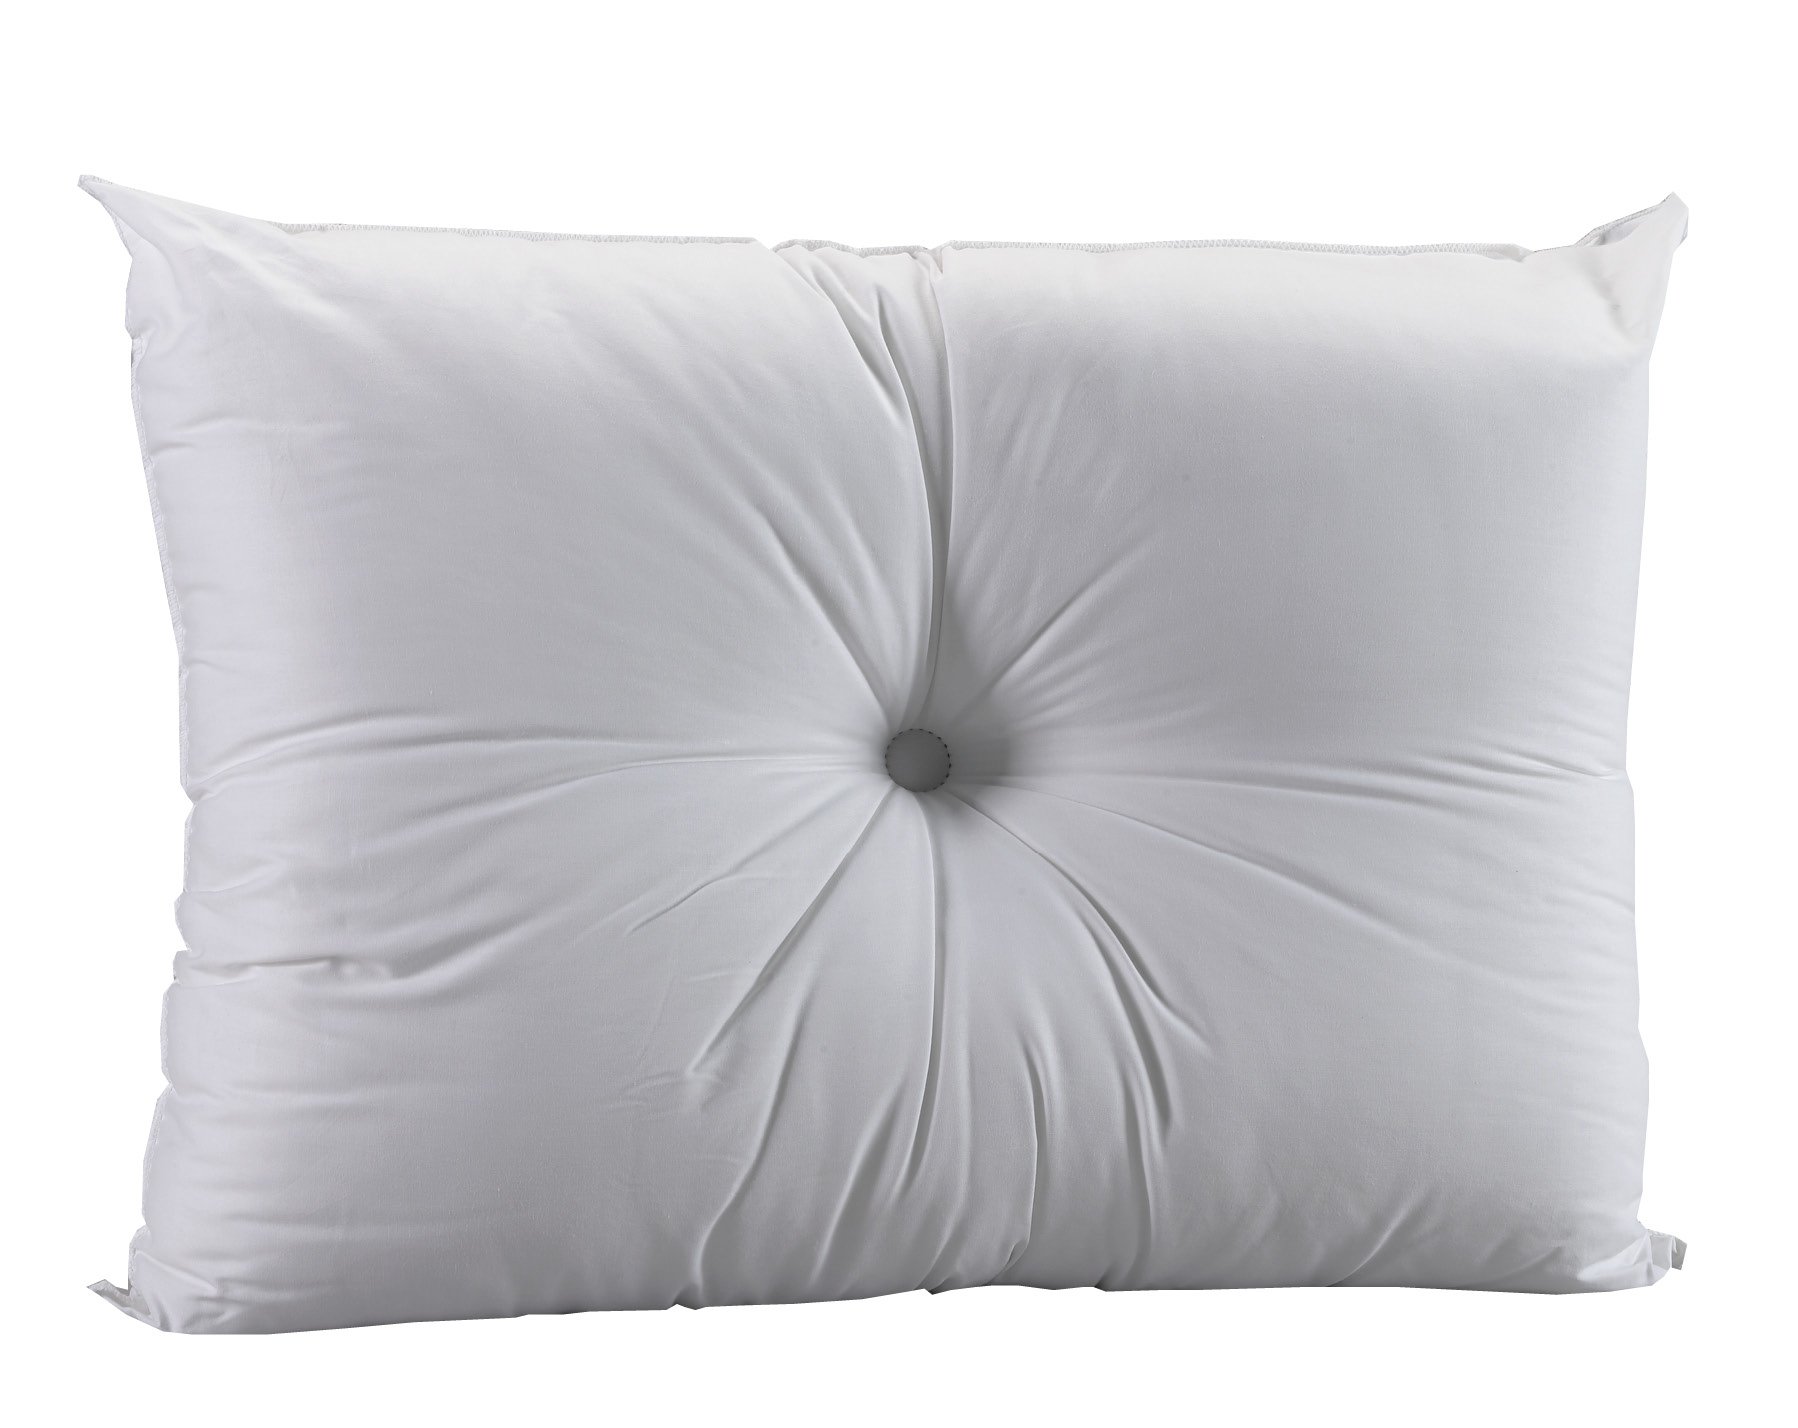 Bilt-Rite Mastex Health Sleepy Hollow Pillow, White